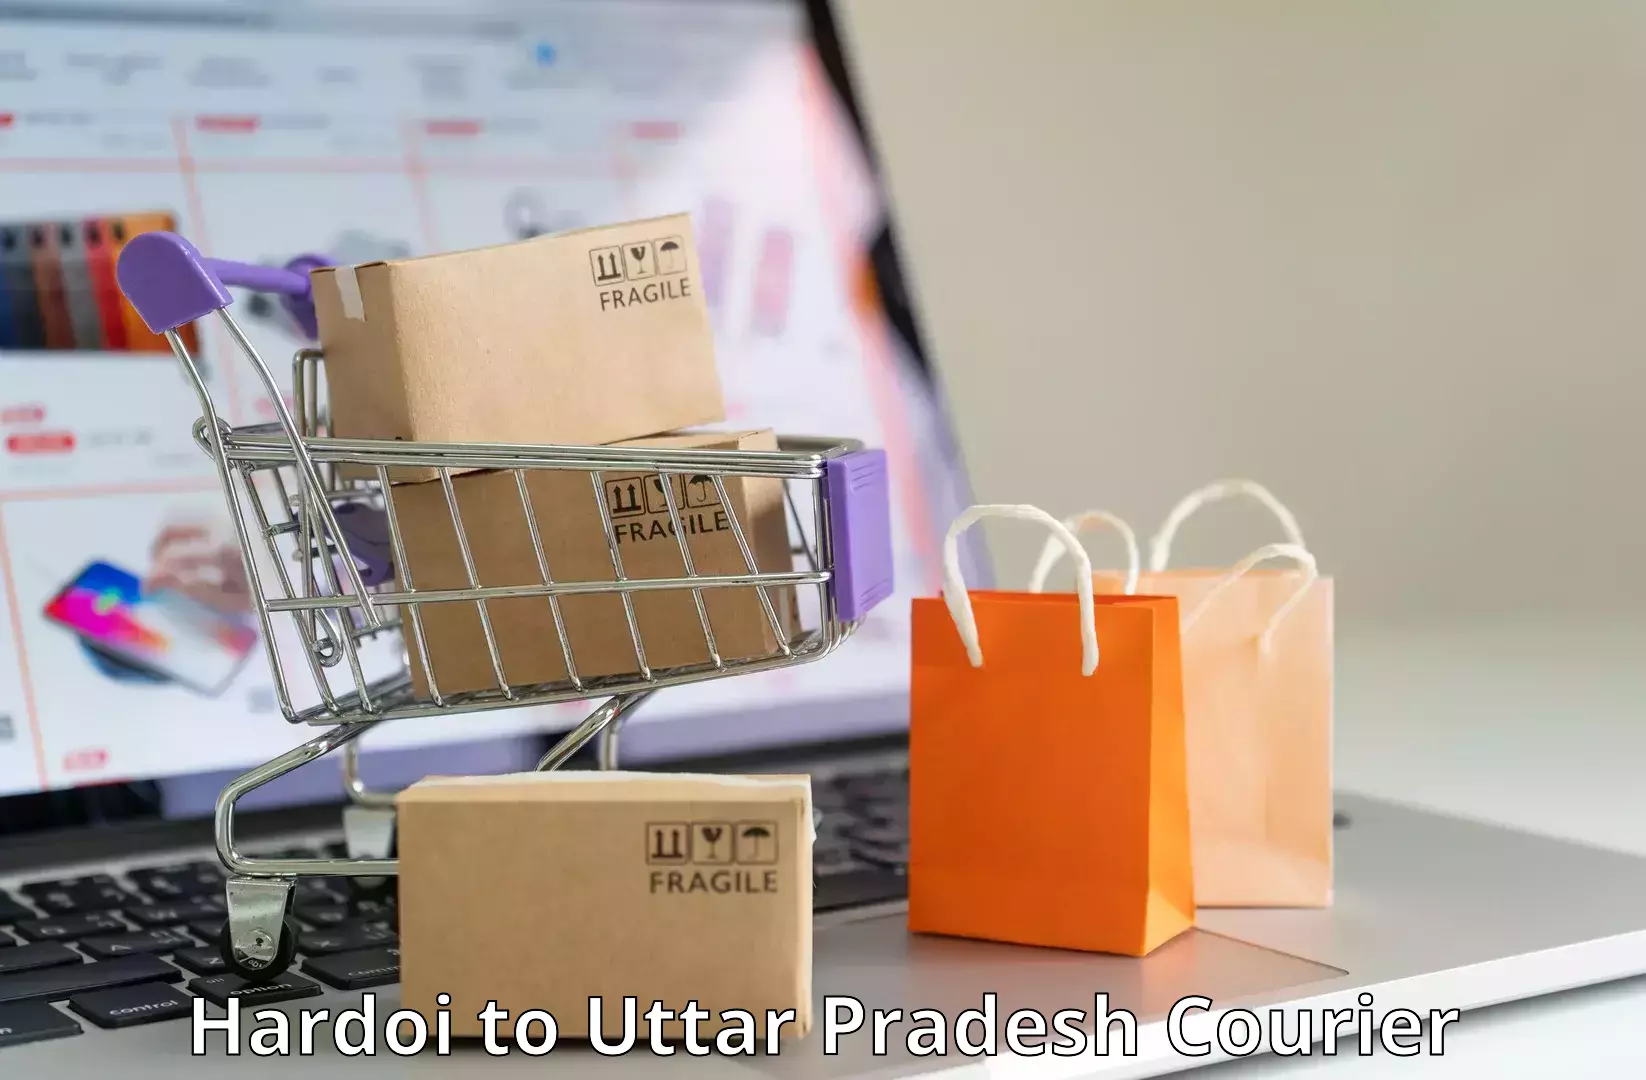 Urgent courier needs Hardoi to Uttar Pradesh